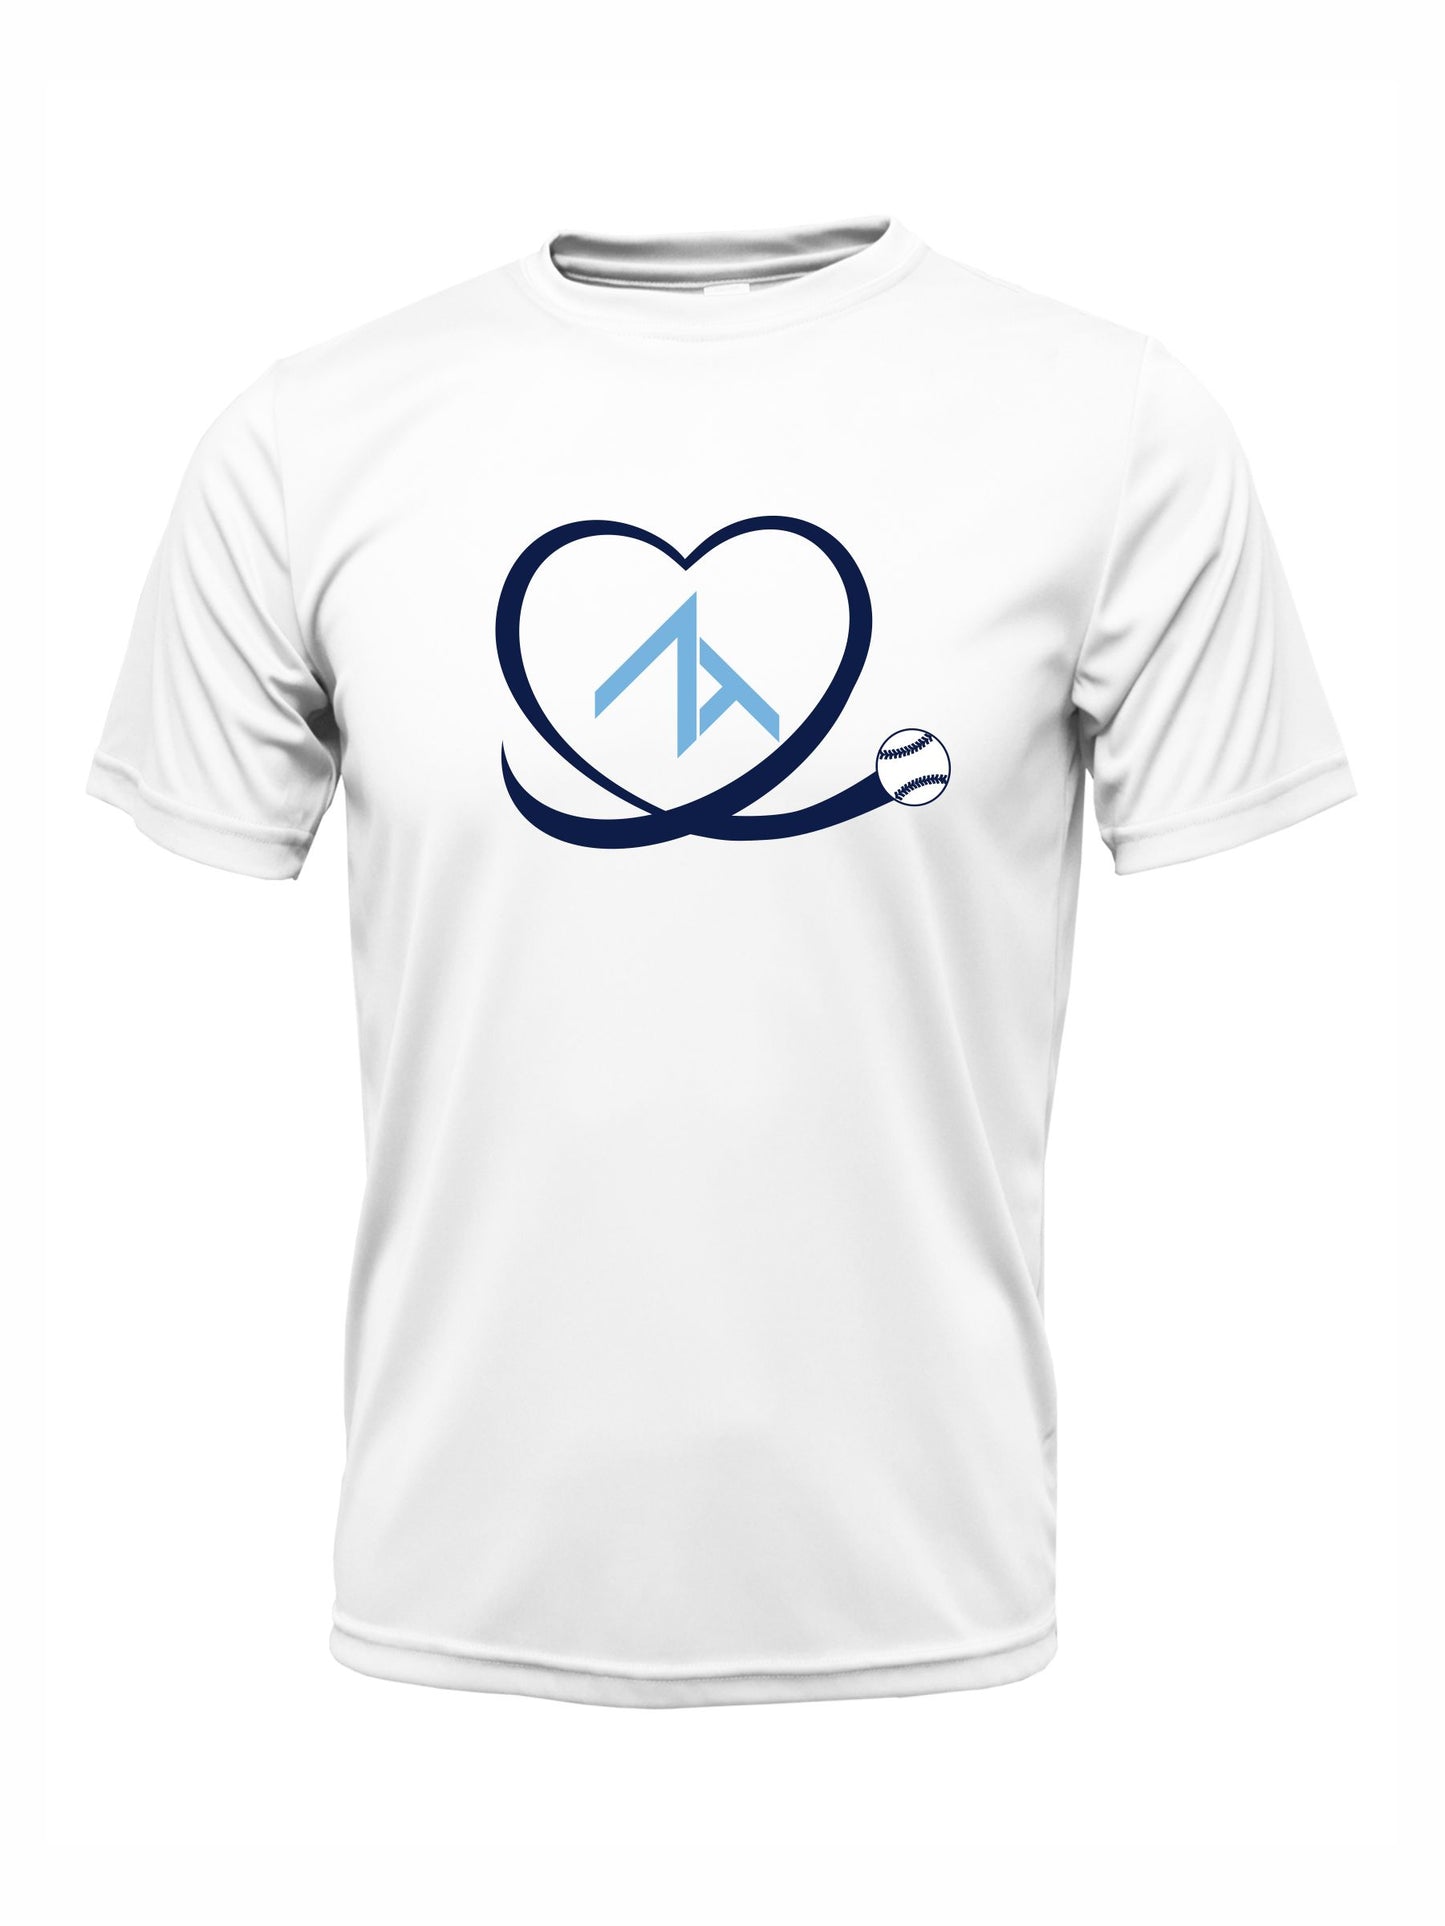 Short Sleeve "HEART" Dri-Fit T-shirt